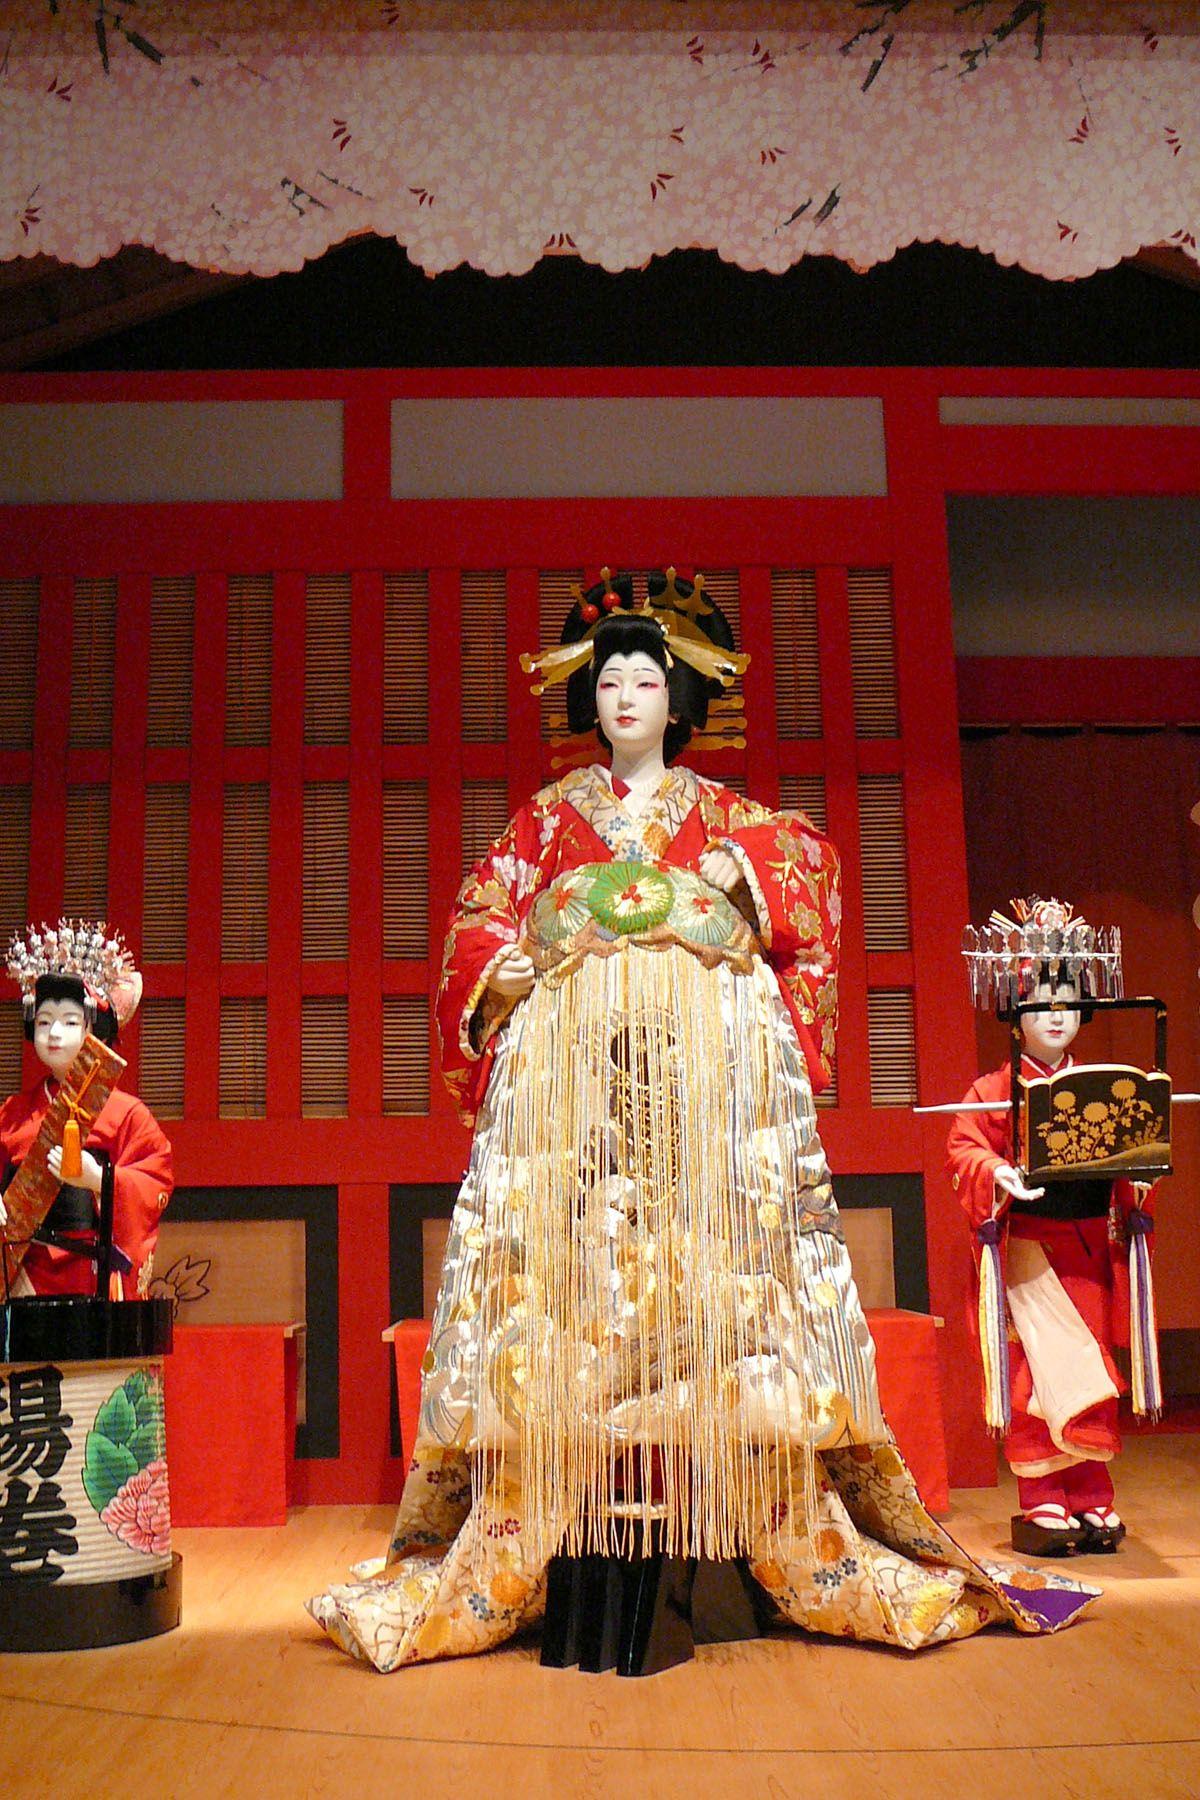 Kabuki Theater